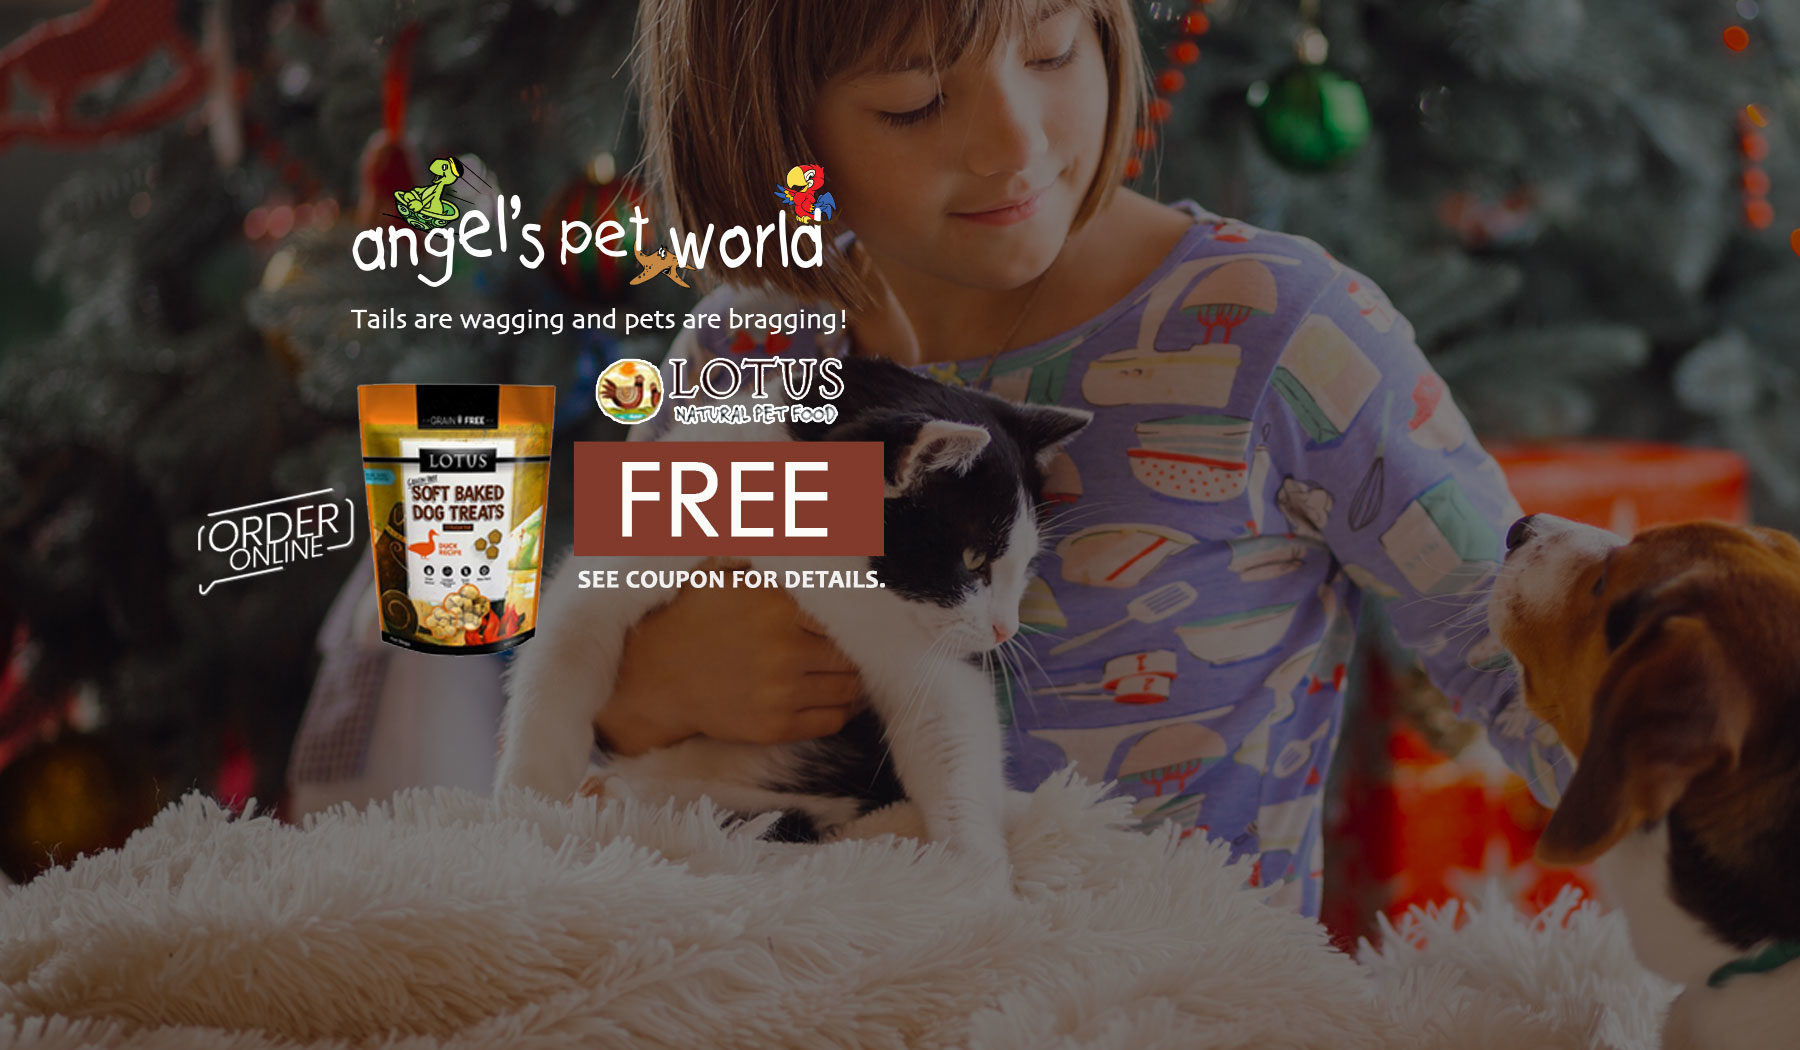 Free Lotus Dog Treats - Shop Local Online - Angel's Pet World